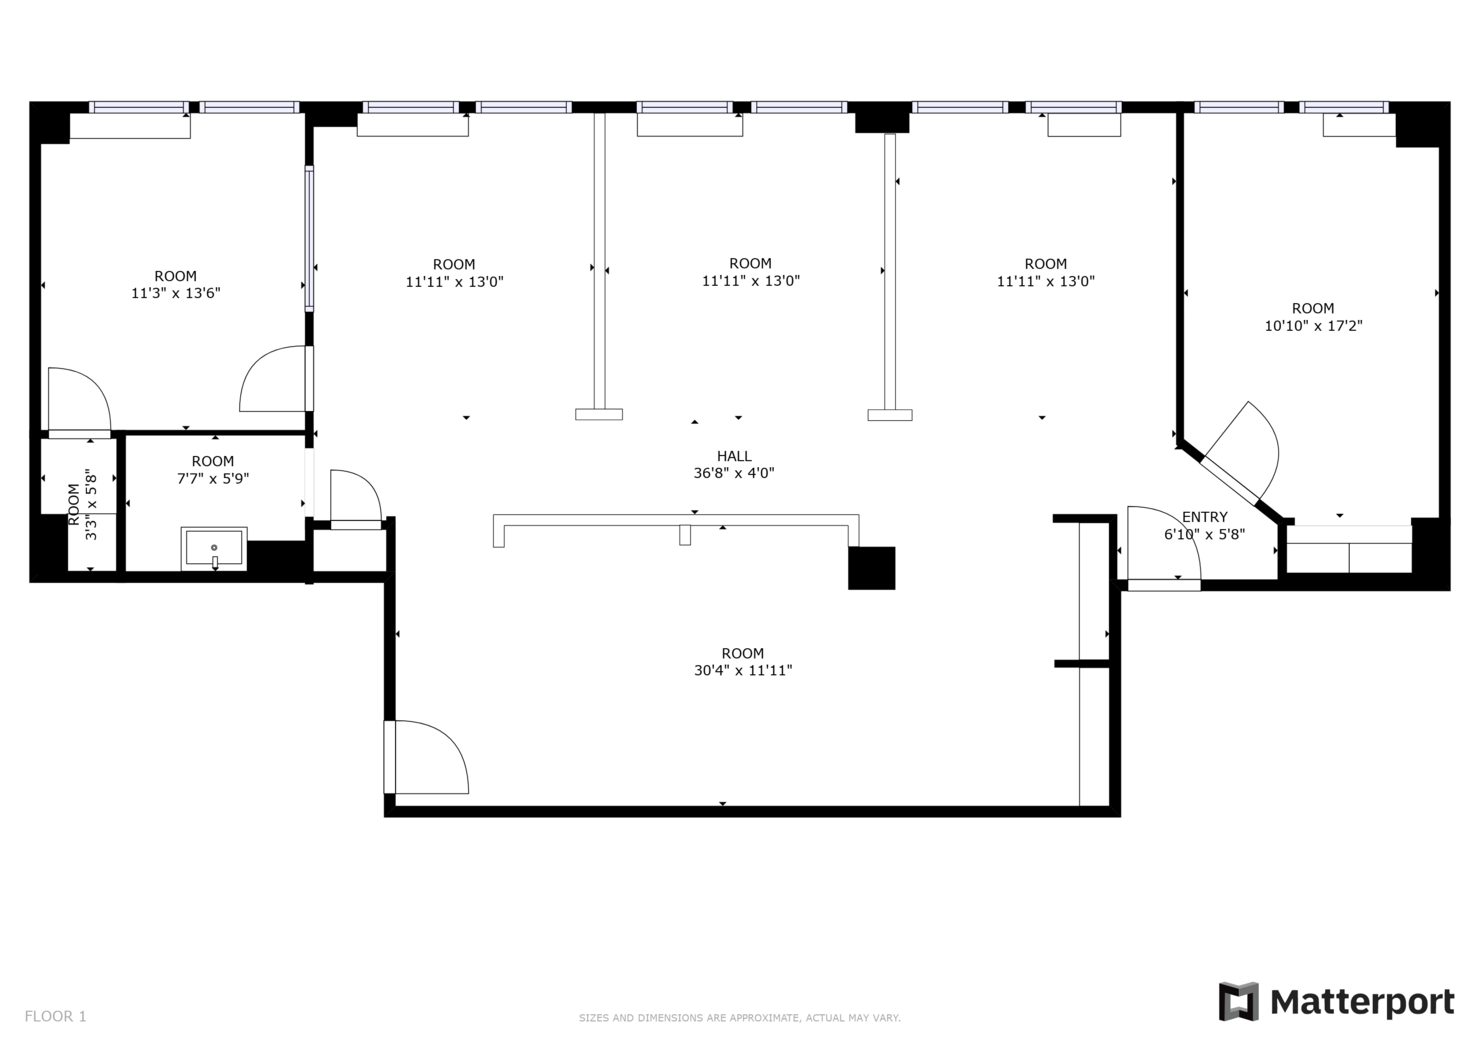 42 West 38th Street Office Space - Floorplan